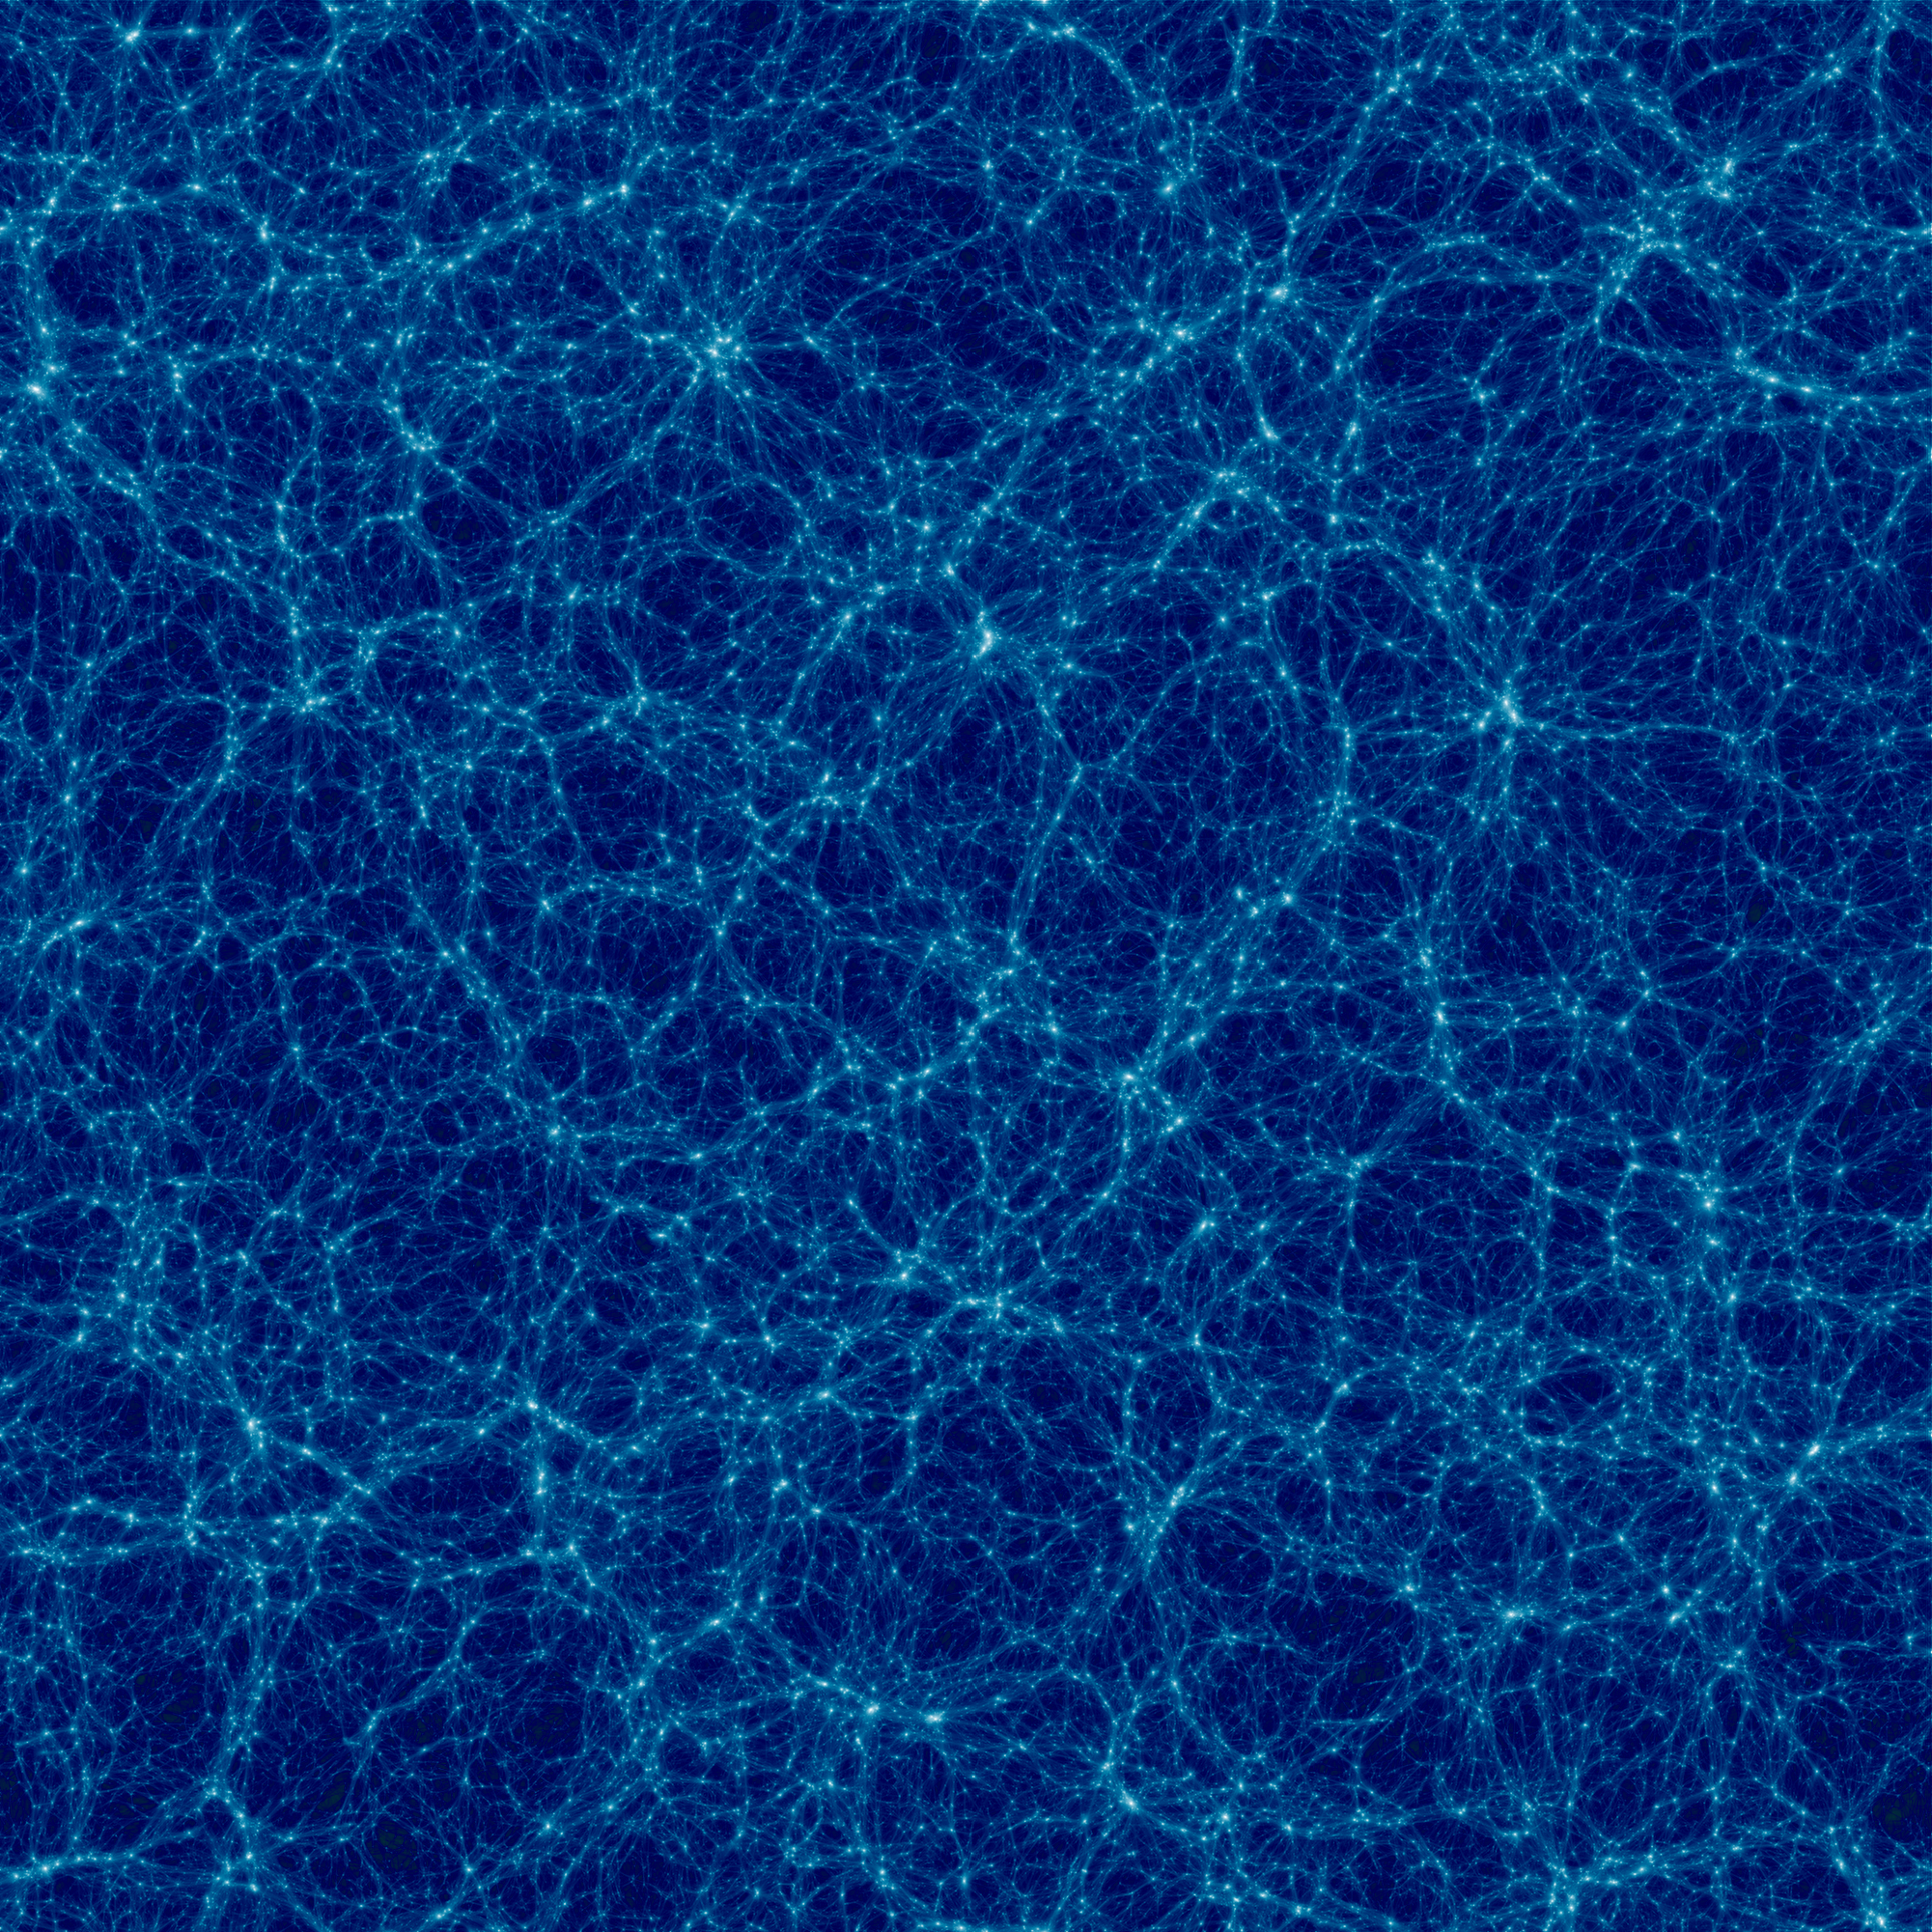 The Fabric of the Universe – Benedikt Diemer